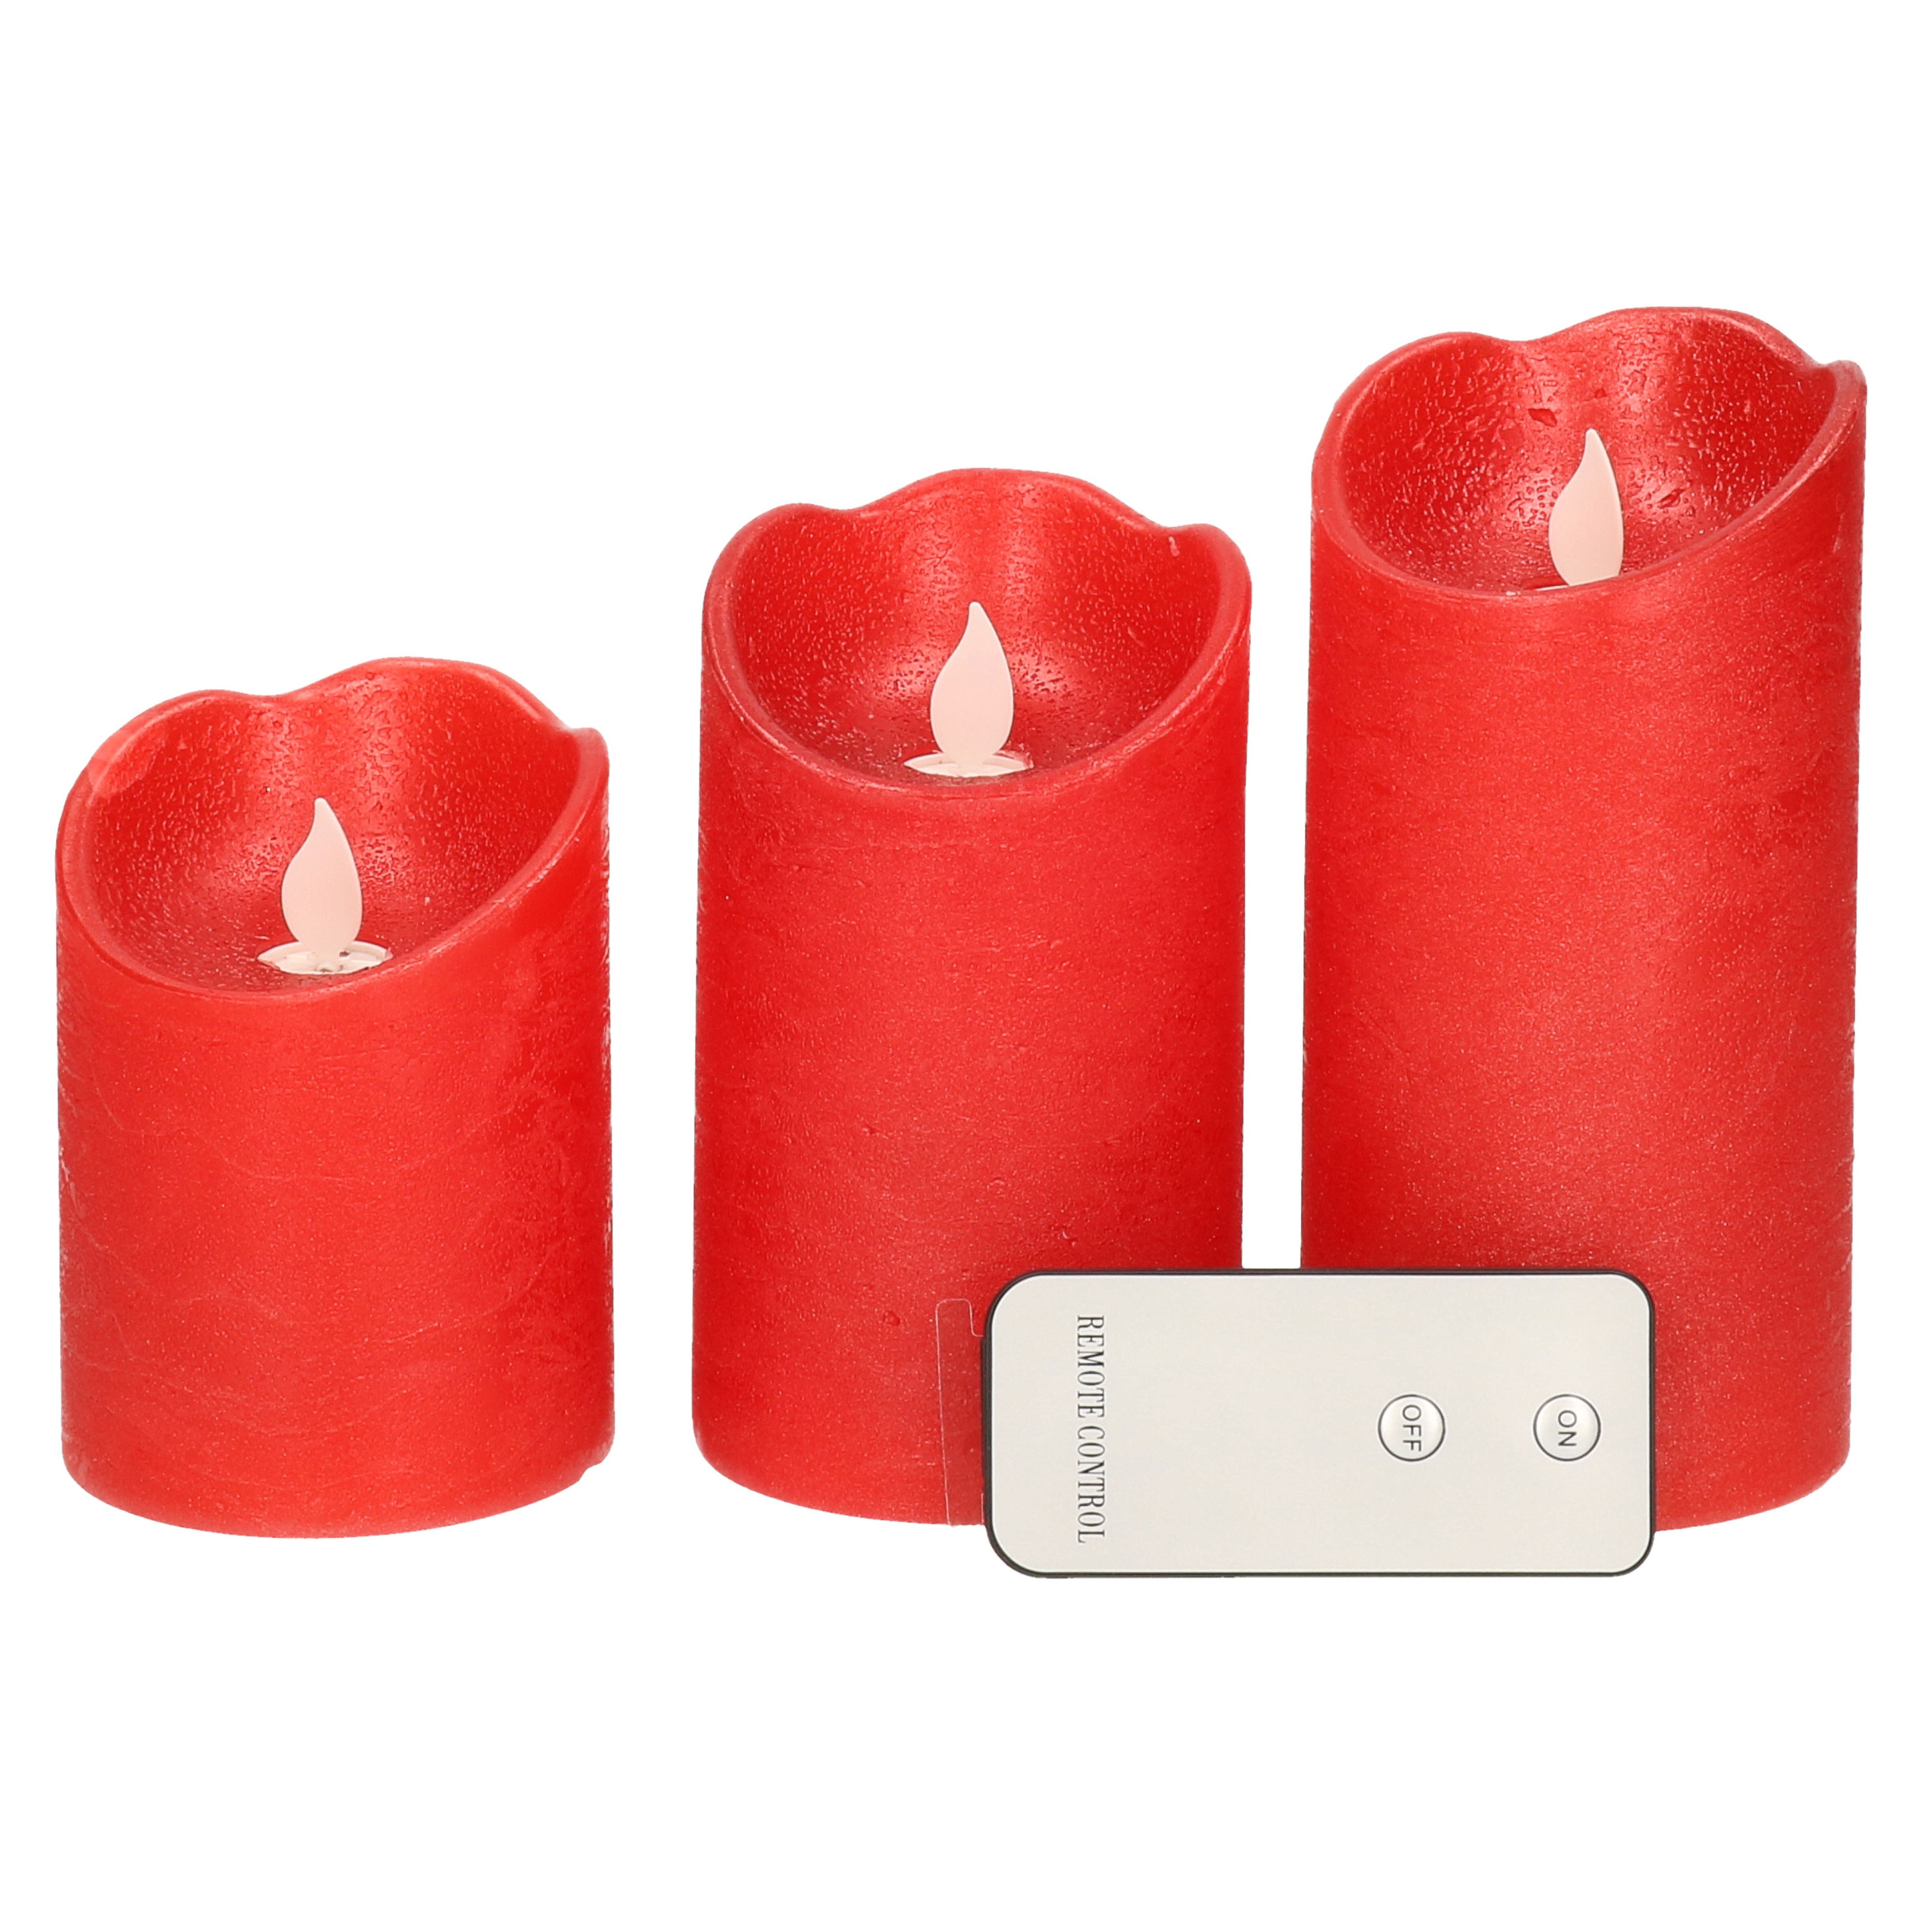 Kaarsen set van 3x stuks led stompkaarsen rood met afstandsbediening